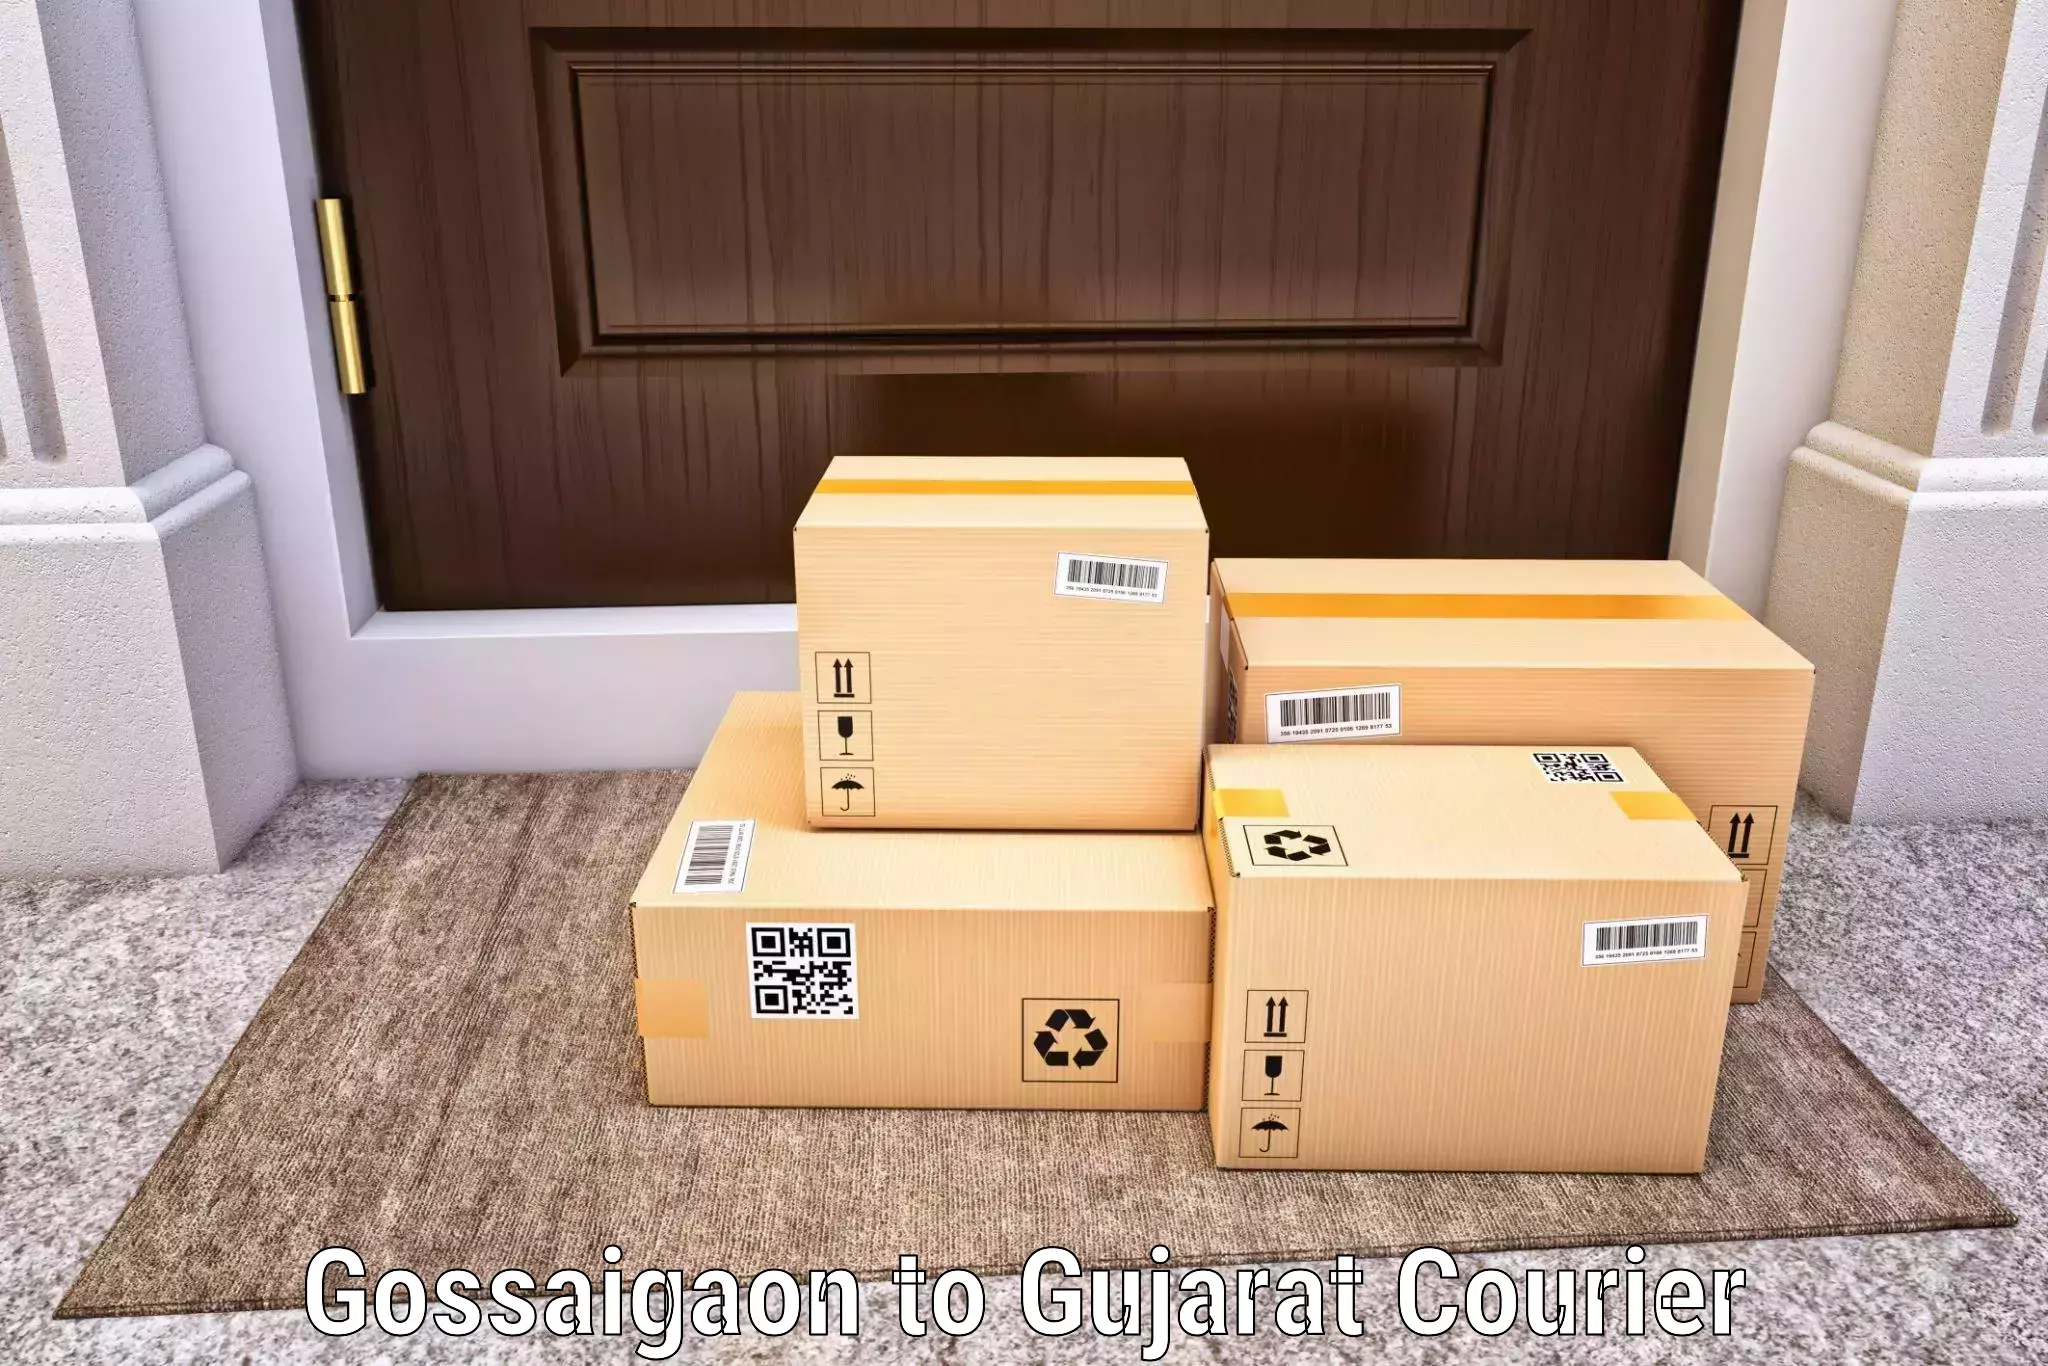 Courier service innovation Gossaigaon to Gujarat